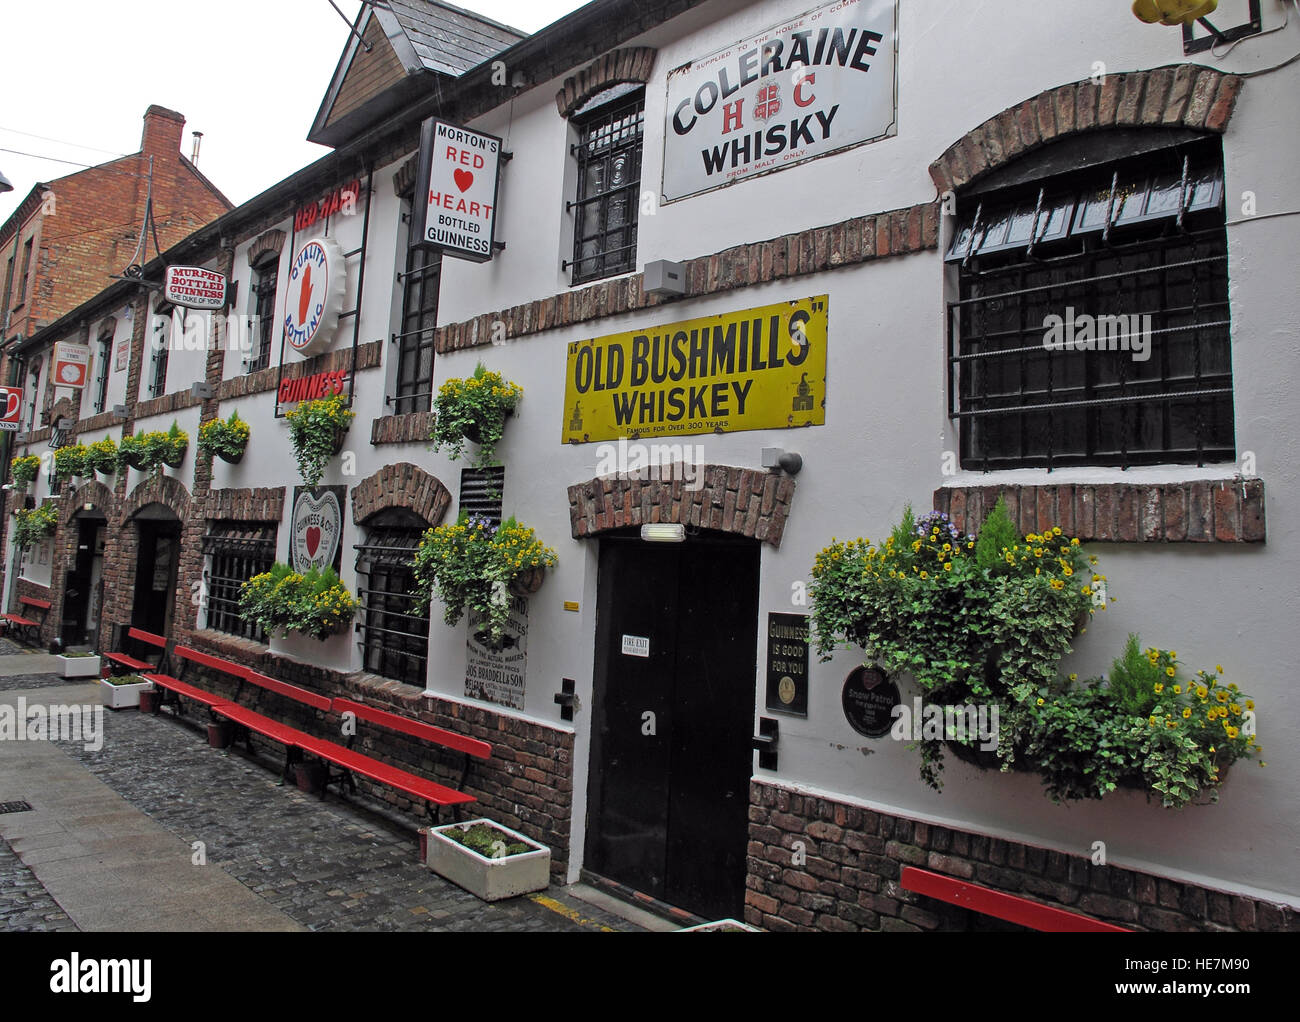 Duke Of York Pub,Belfast, showing Old Bushmills Whiskey ads Stock Photo